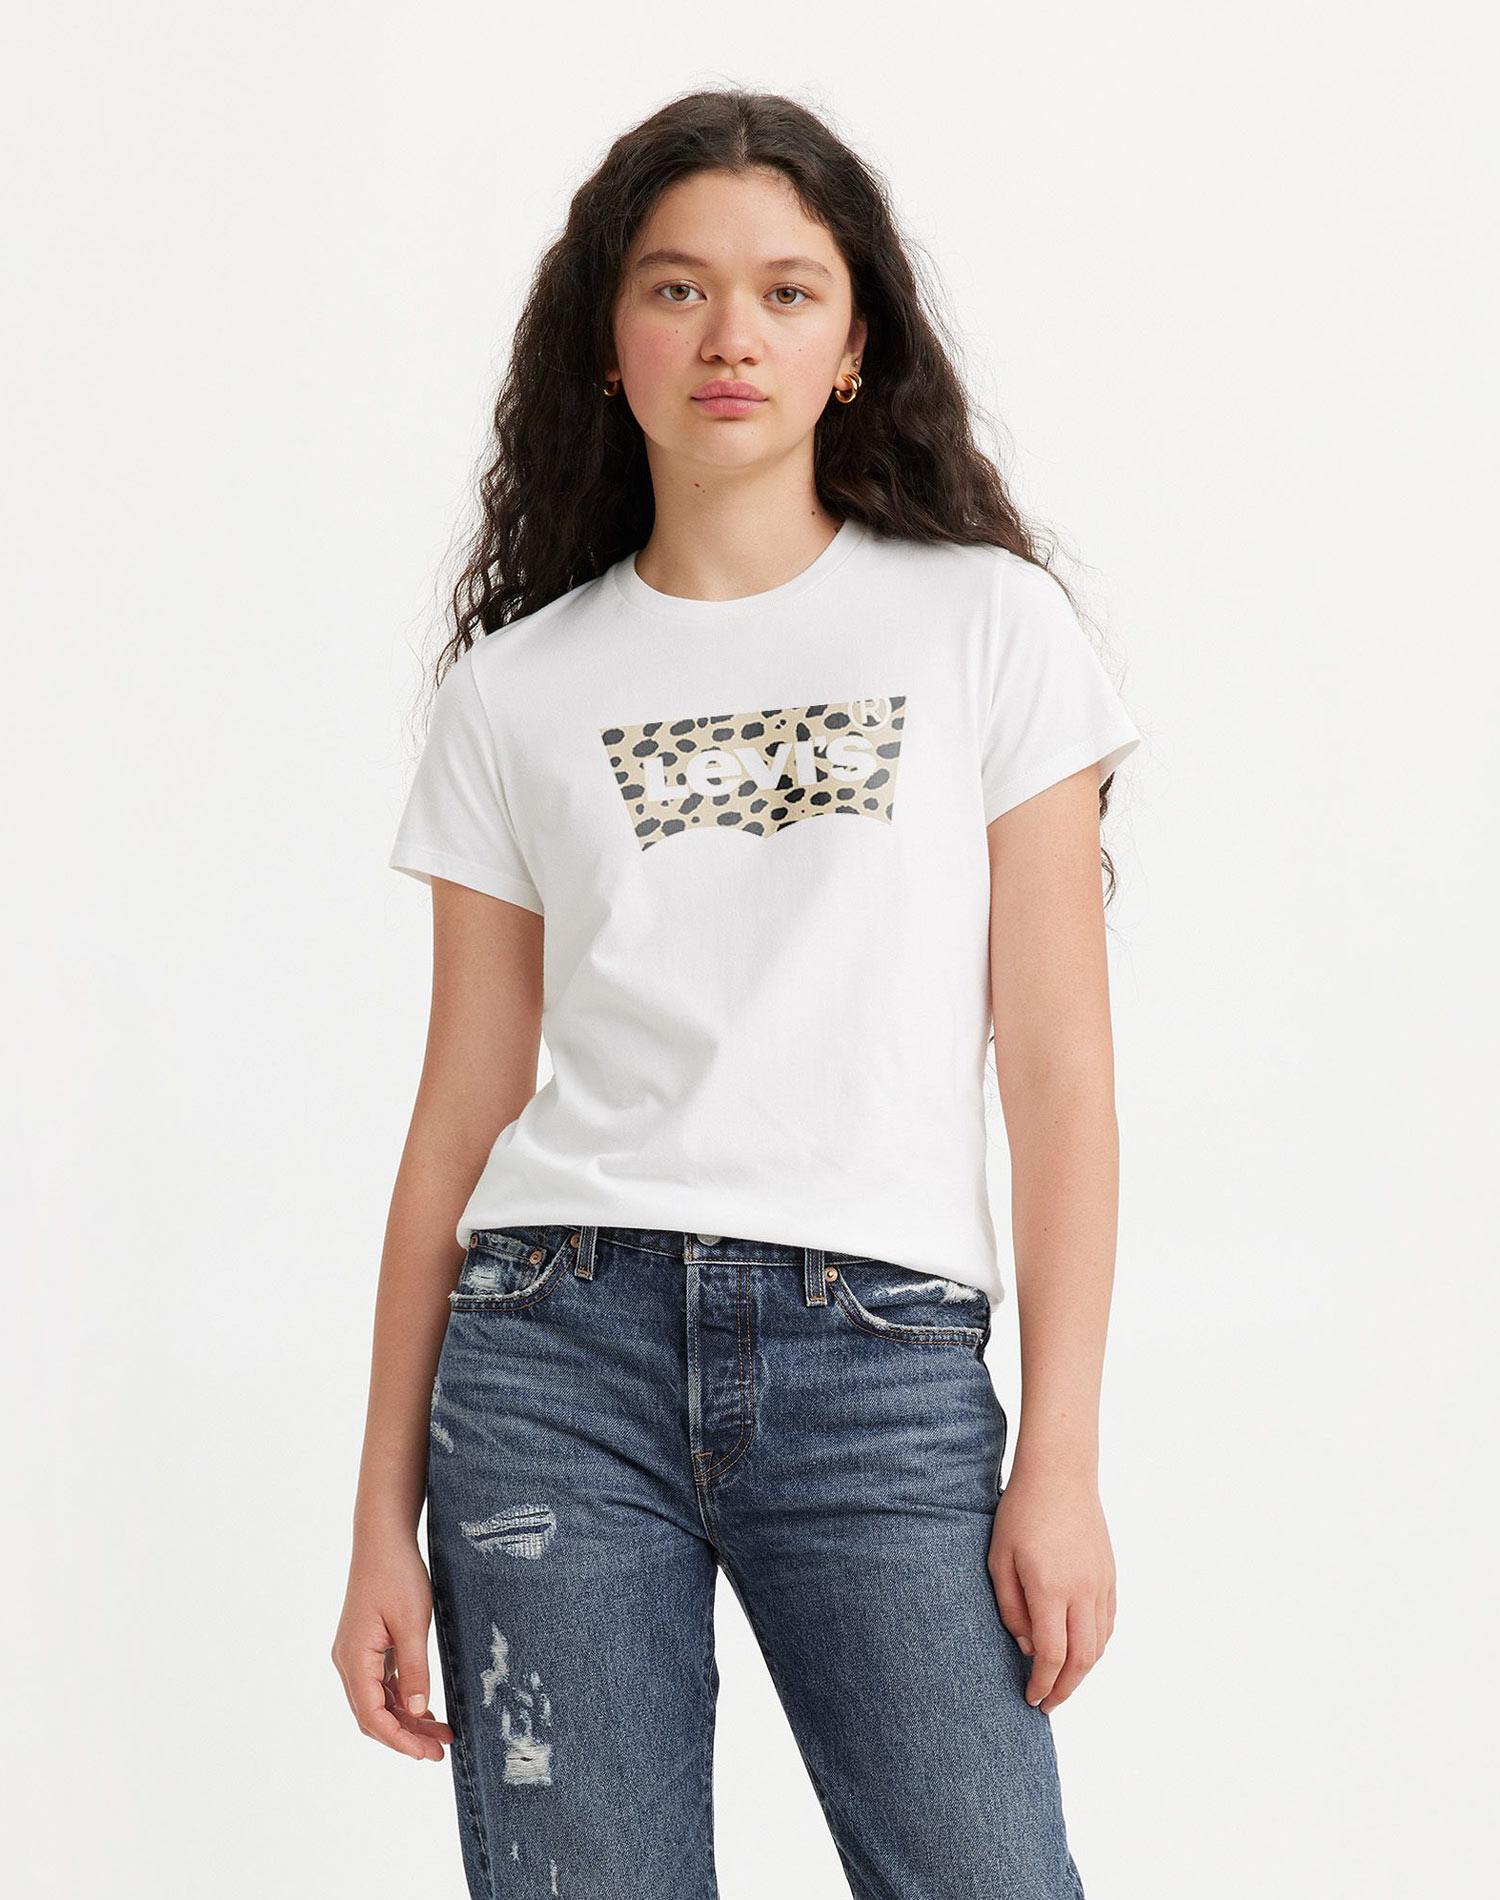 Levi's® camiseta de mujer de m/c 17369-2436 blanca